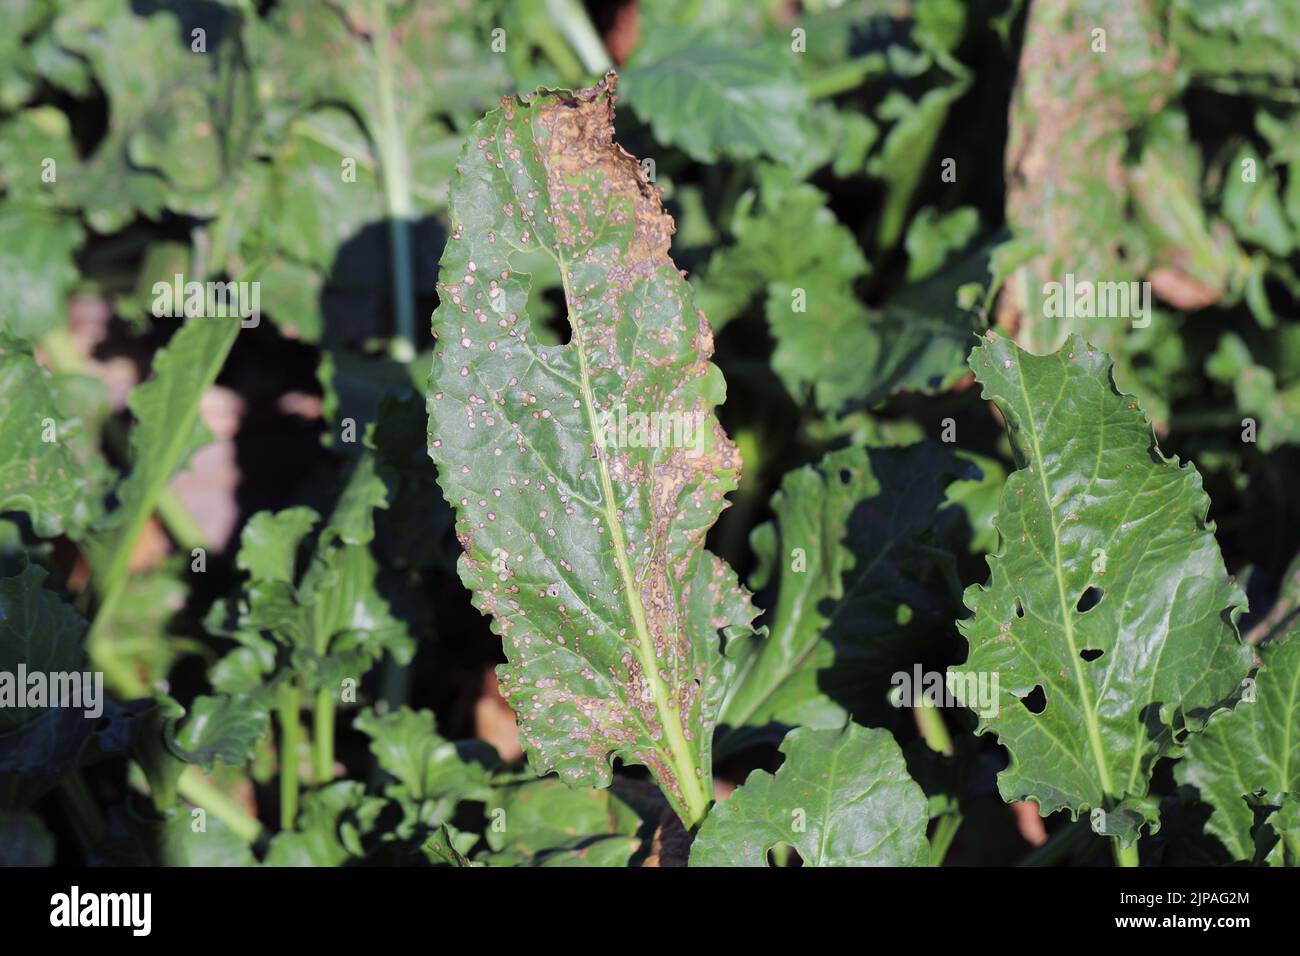 Cercospora leaf spot (Cercospora beticola) infection on a sugar beet plant. Stock Photo